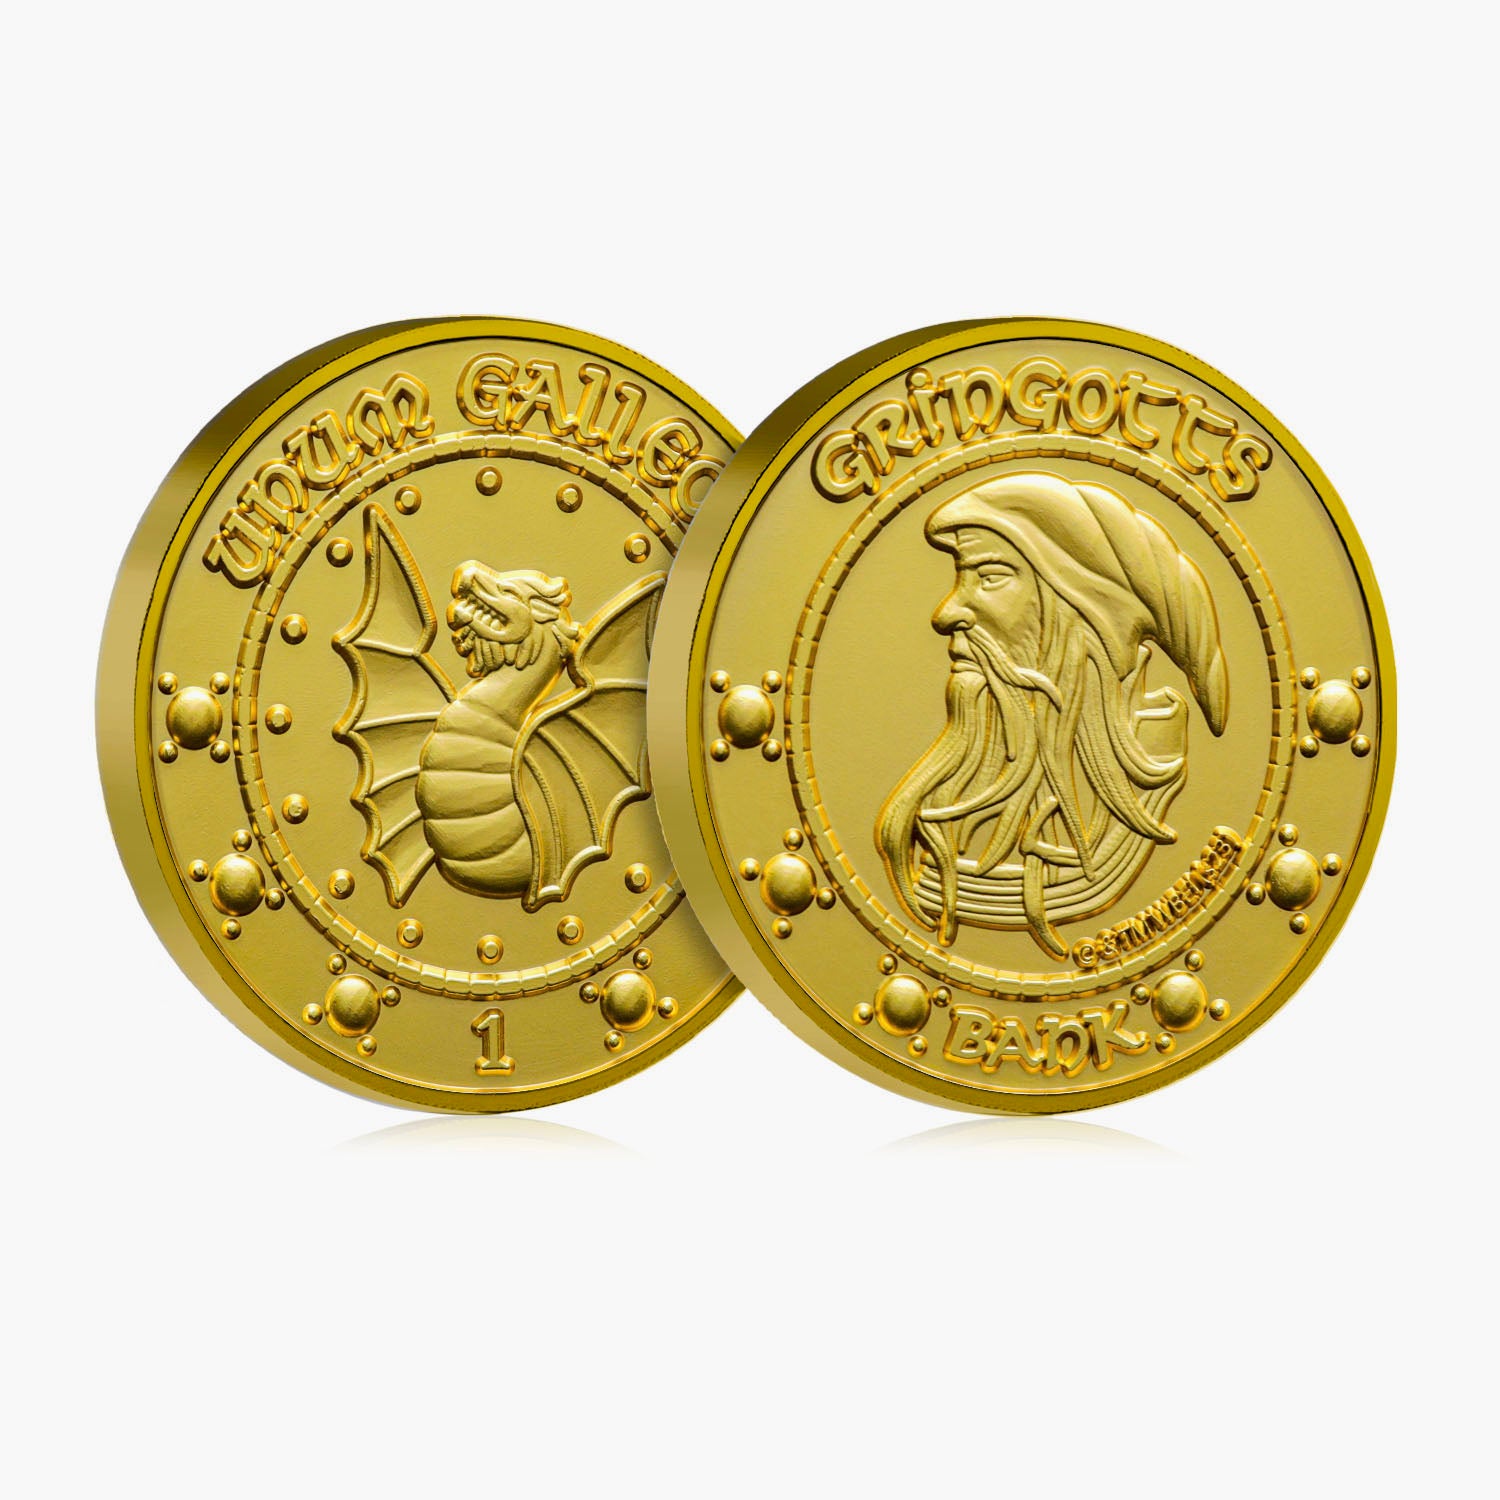 Harry Potter Gringotts Wizarding Bank Coin Set